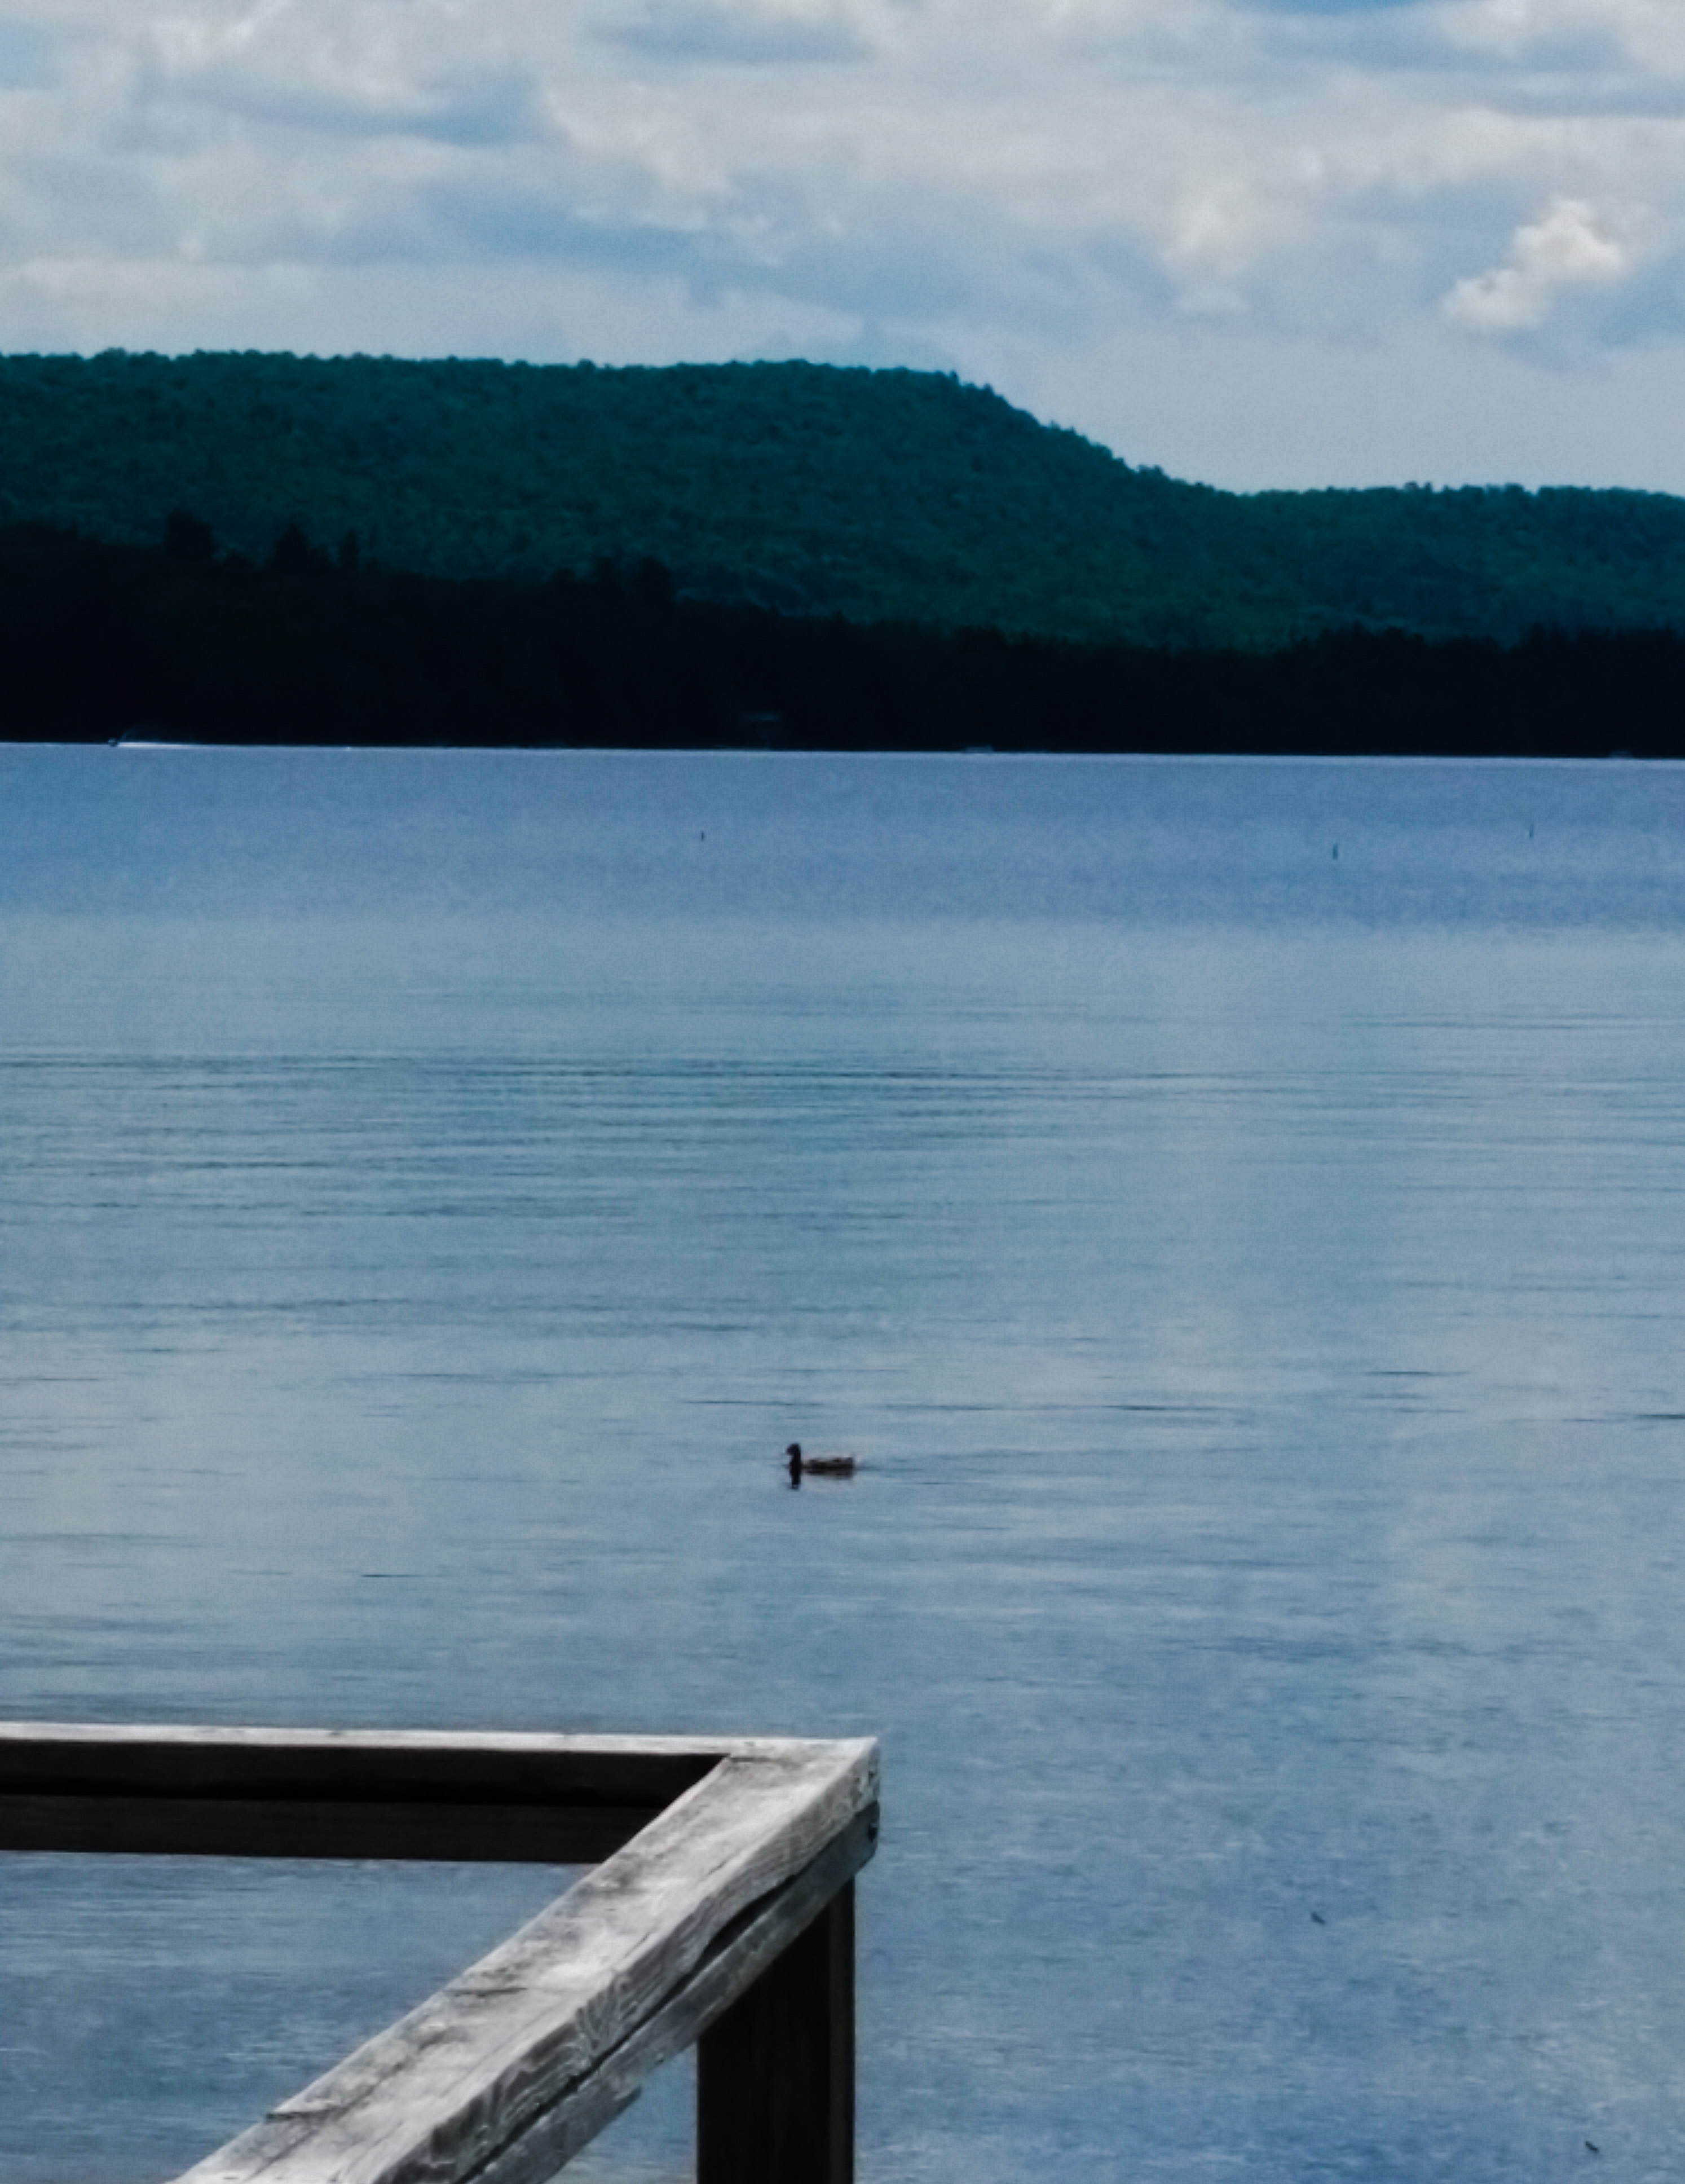 Sabbath Sunday: The Duck in the Lake